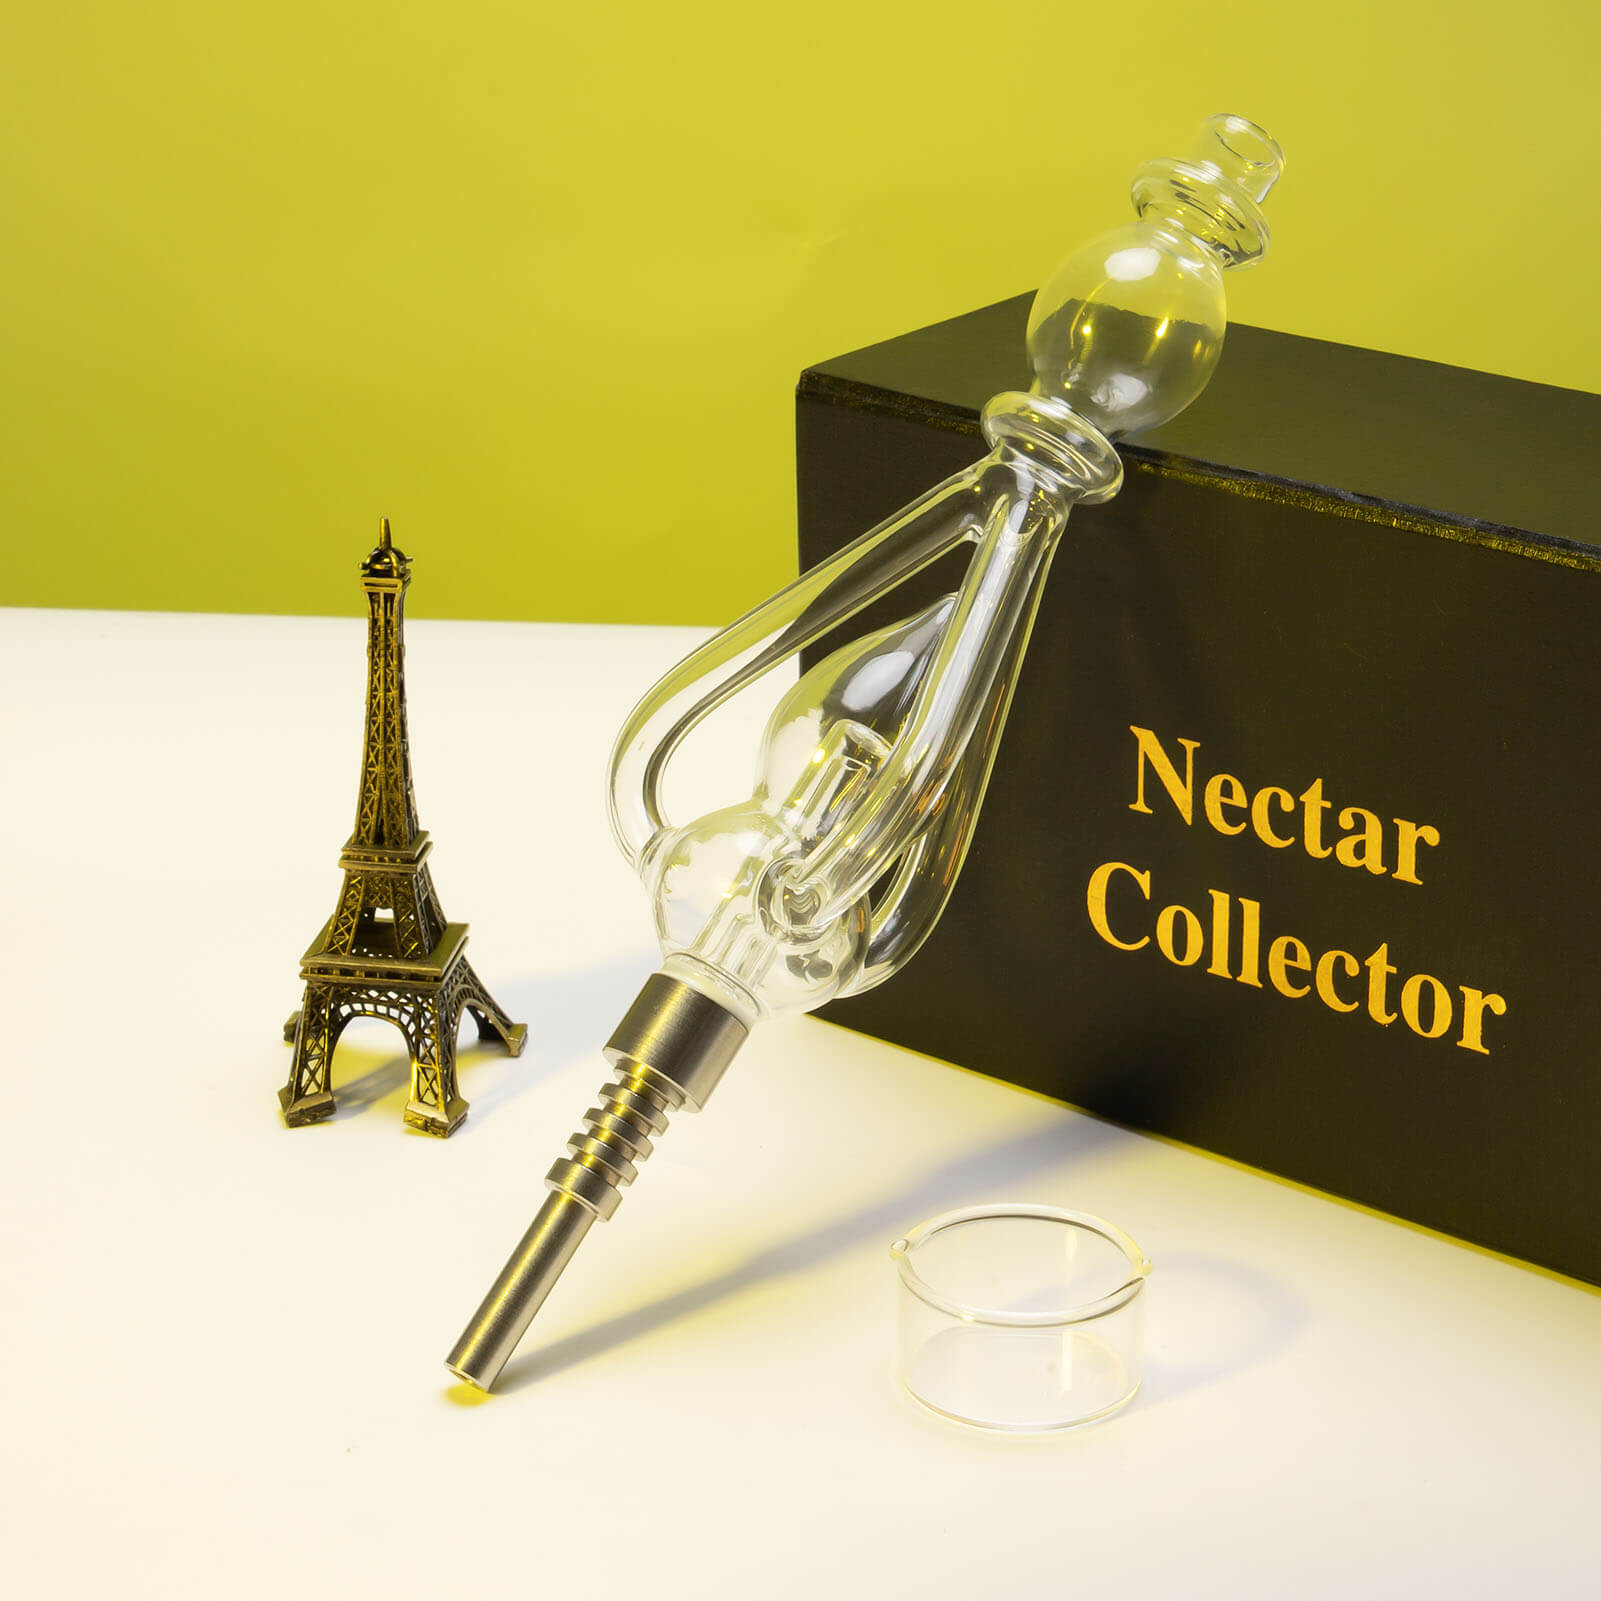 Nectar Collector, Dab Straw, Dab Kit